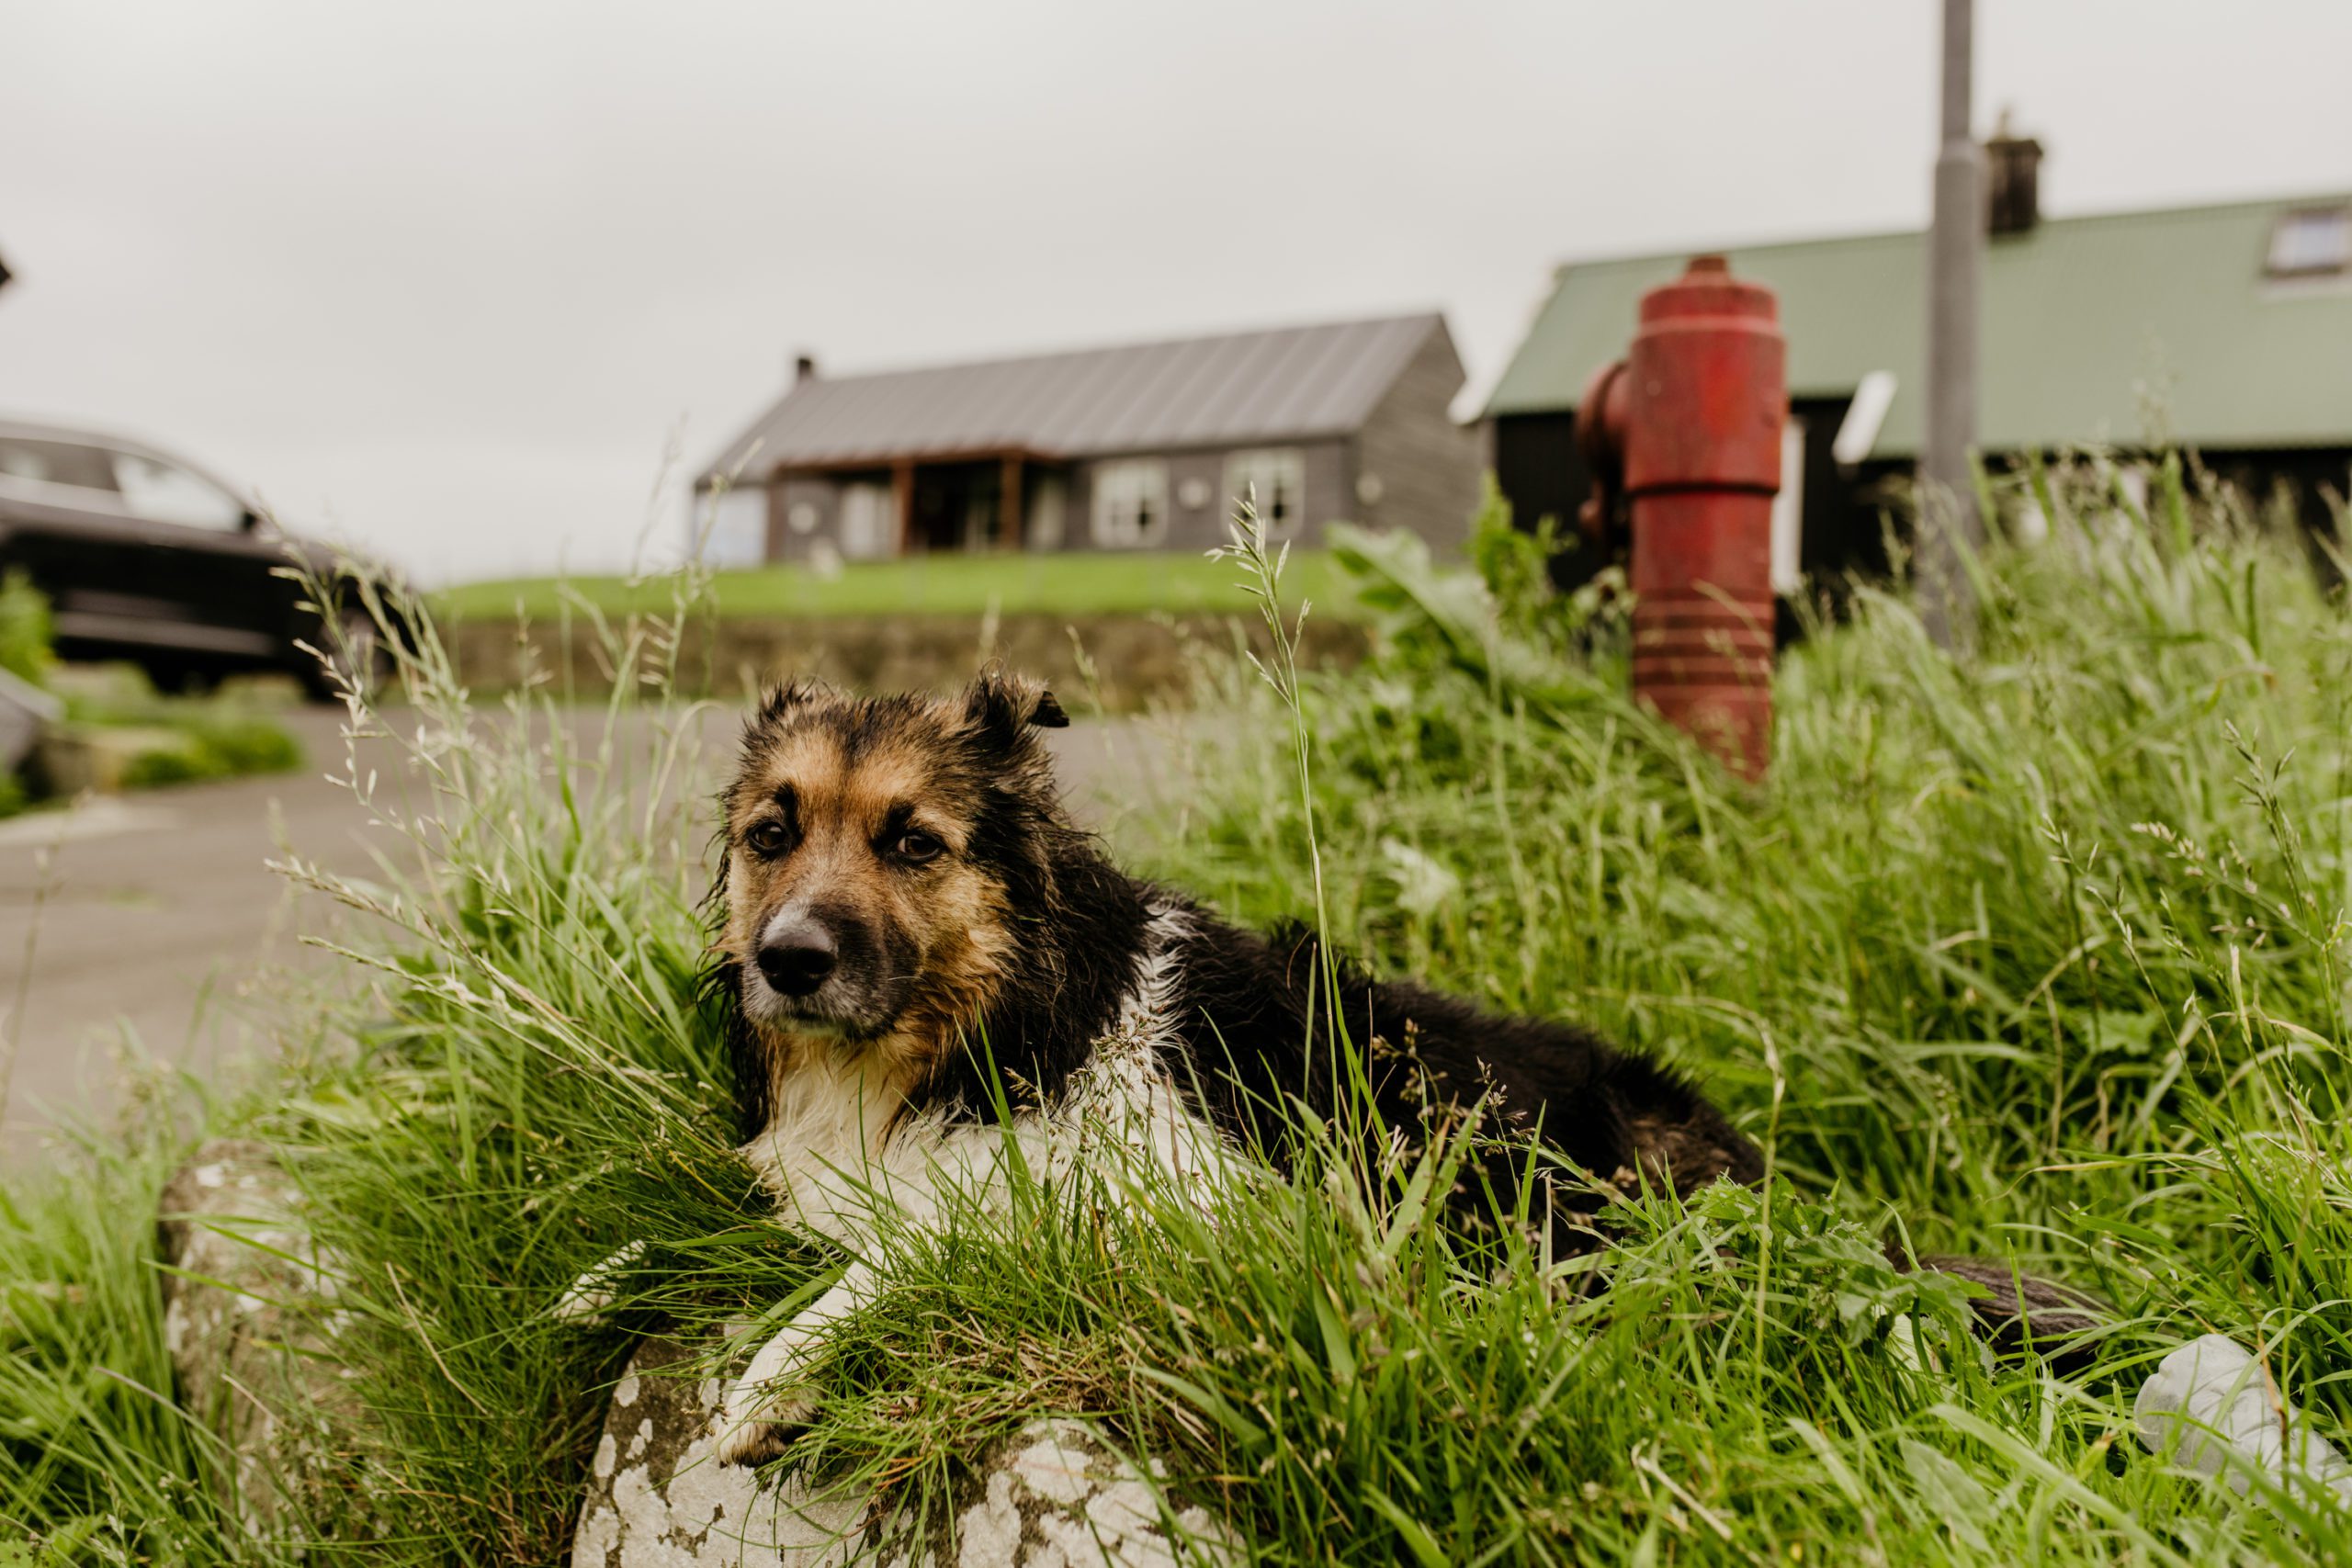 Gásadalur is a remote village on Vágar island in the wild Faroe Islands. How to Elope in Faroe Islands.